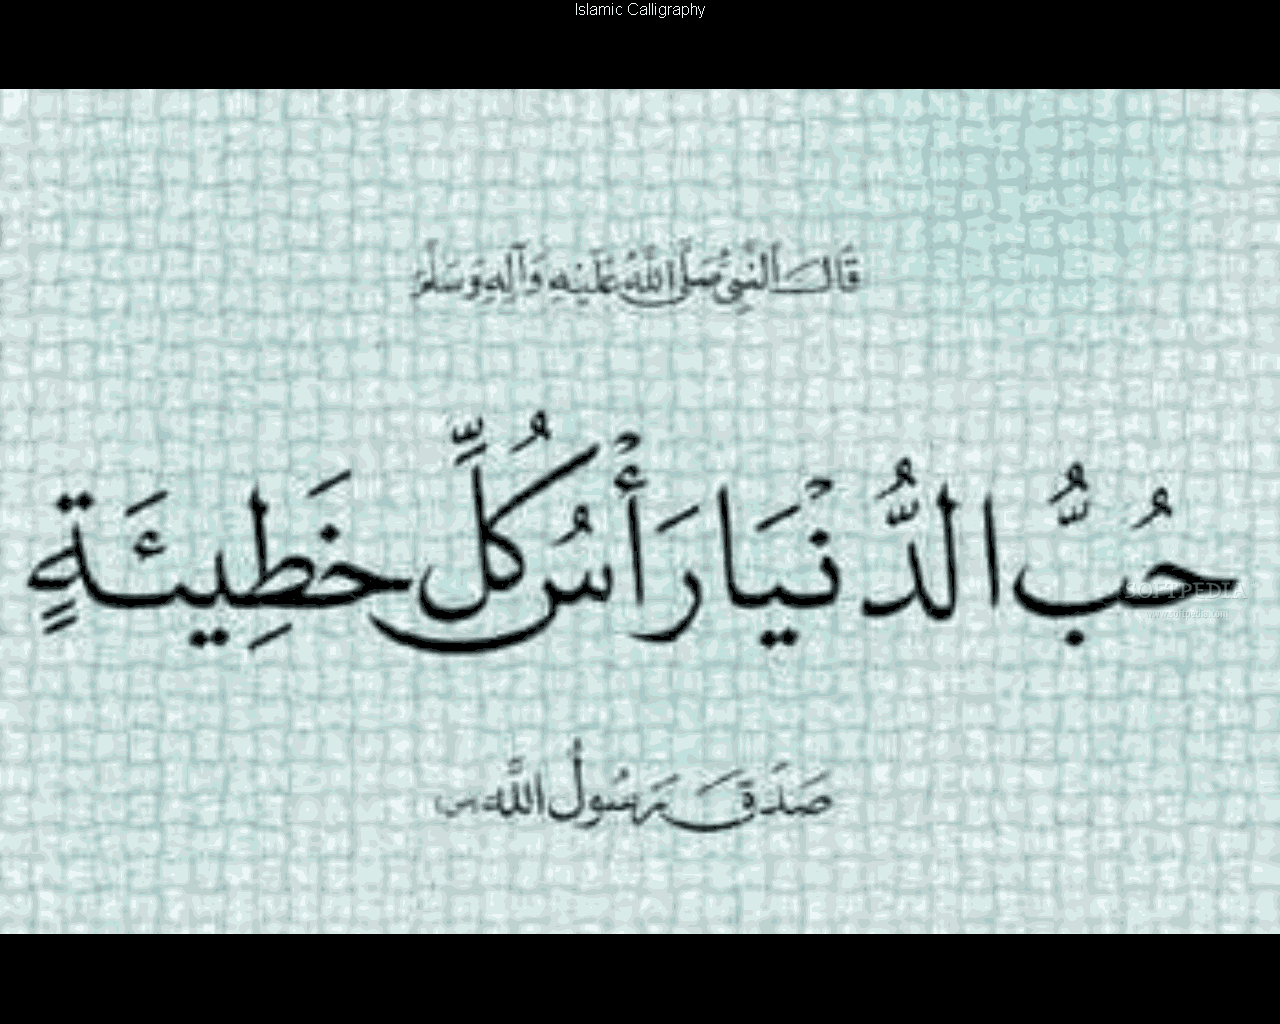 Islamic Calligraphy screensaver